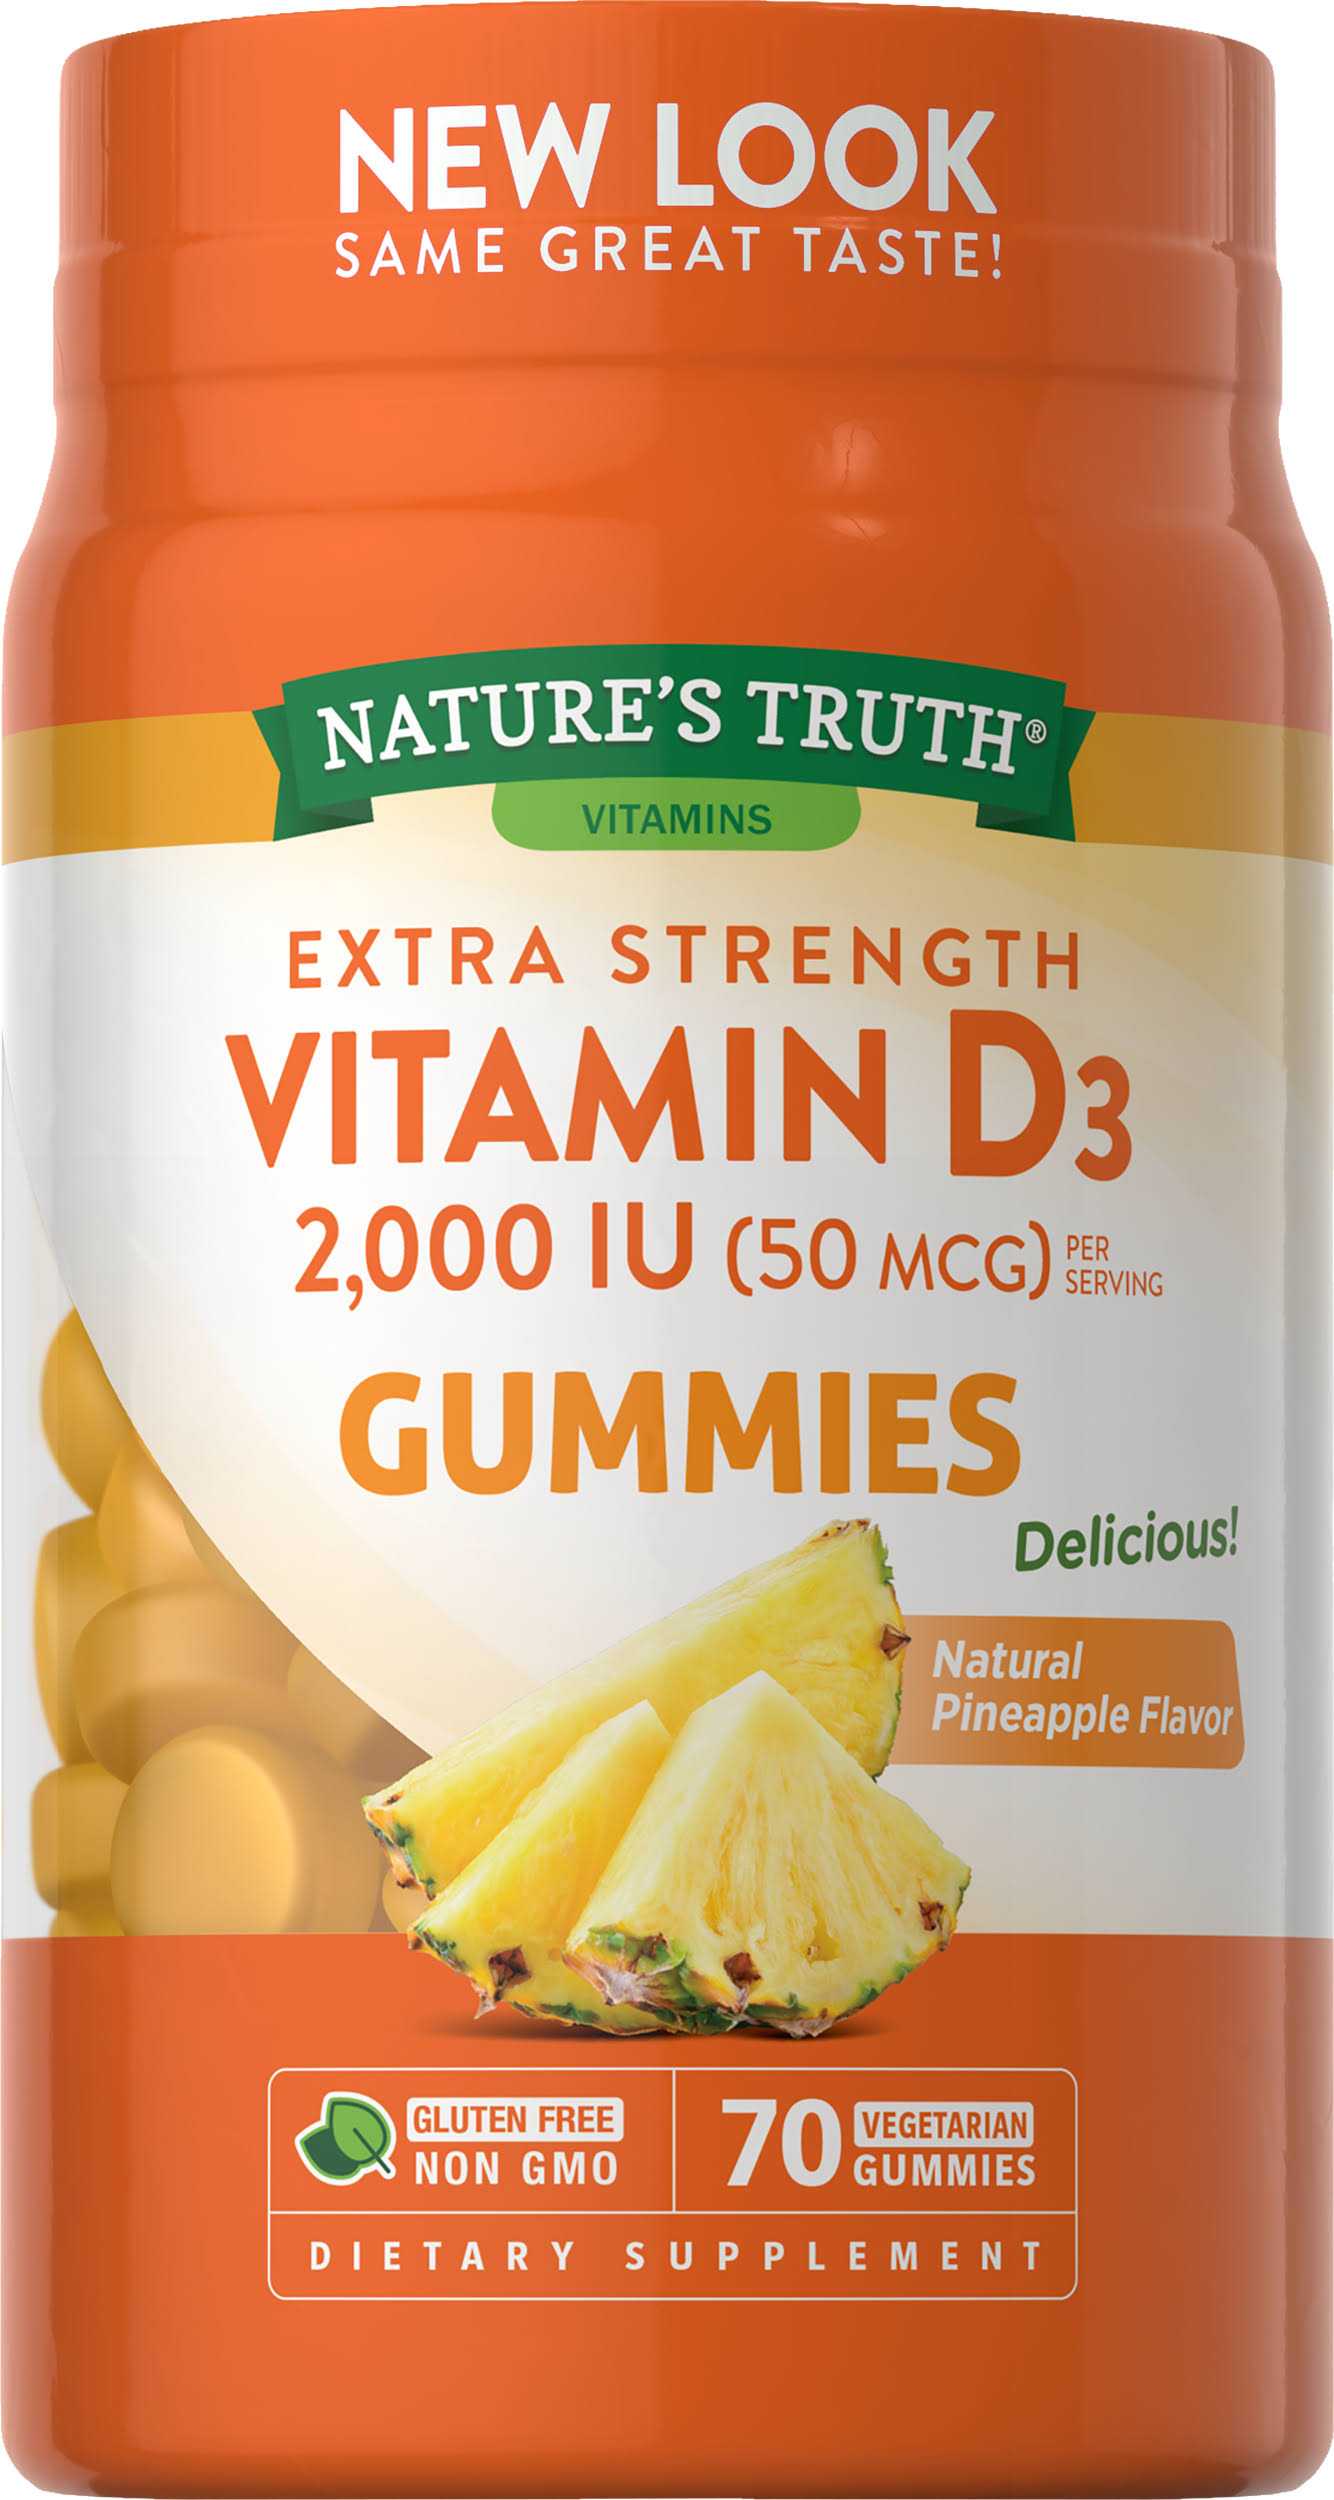 Nature's Truth Vitamin D3, Extra Strength, Natural Pineapple Flavor, 50 mcg, Gummies - 70 ea